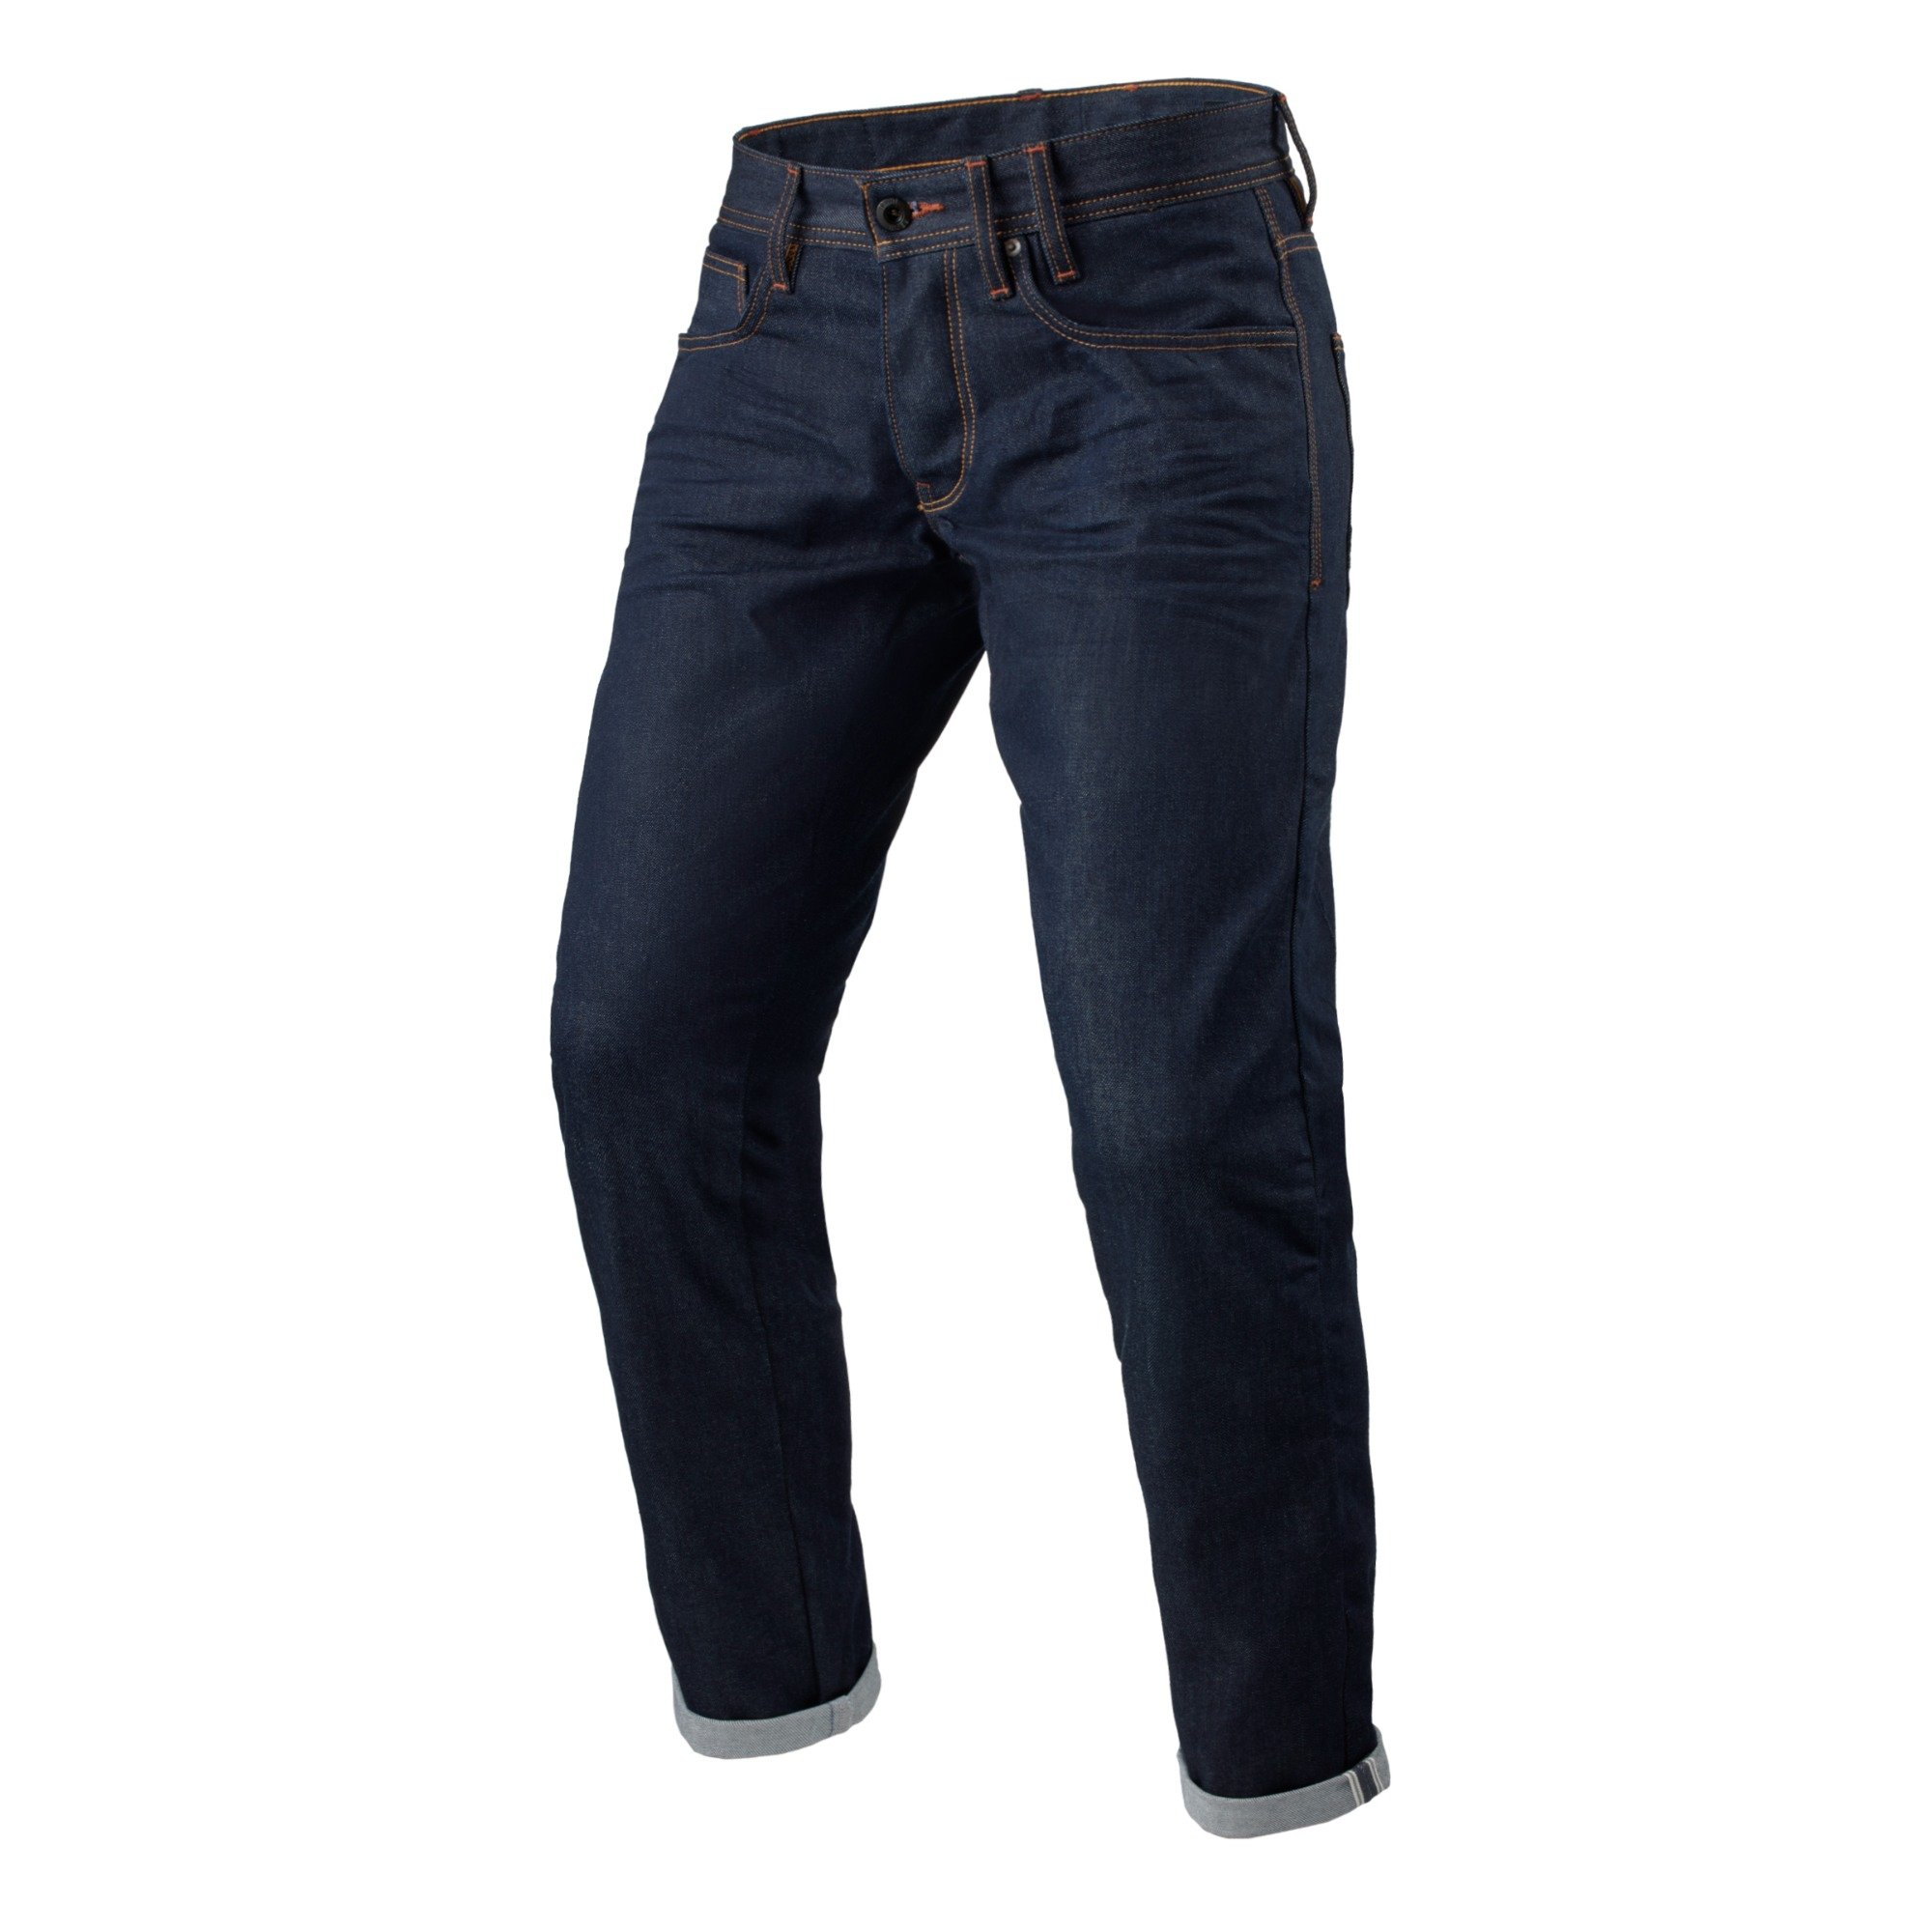 Image of REV'IT! Jeans Lewis Selvedge TF Dark Blue L34 Motorcycle Pants Size L34/W33 EN